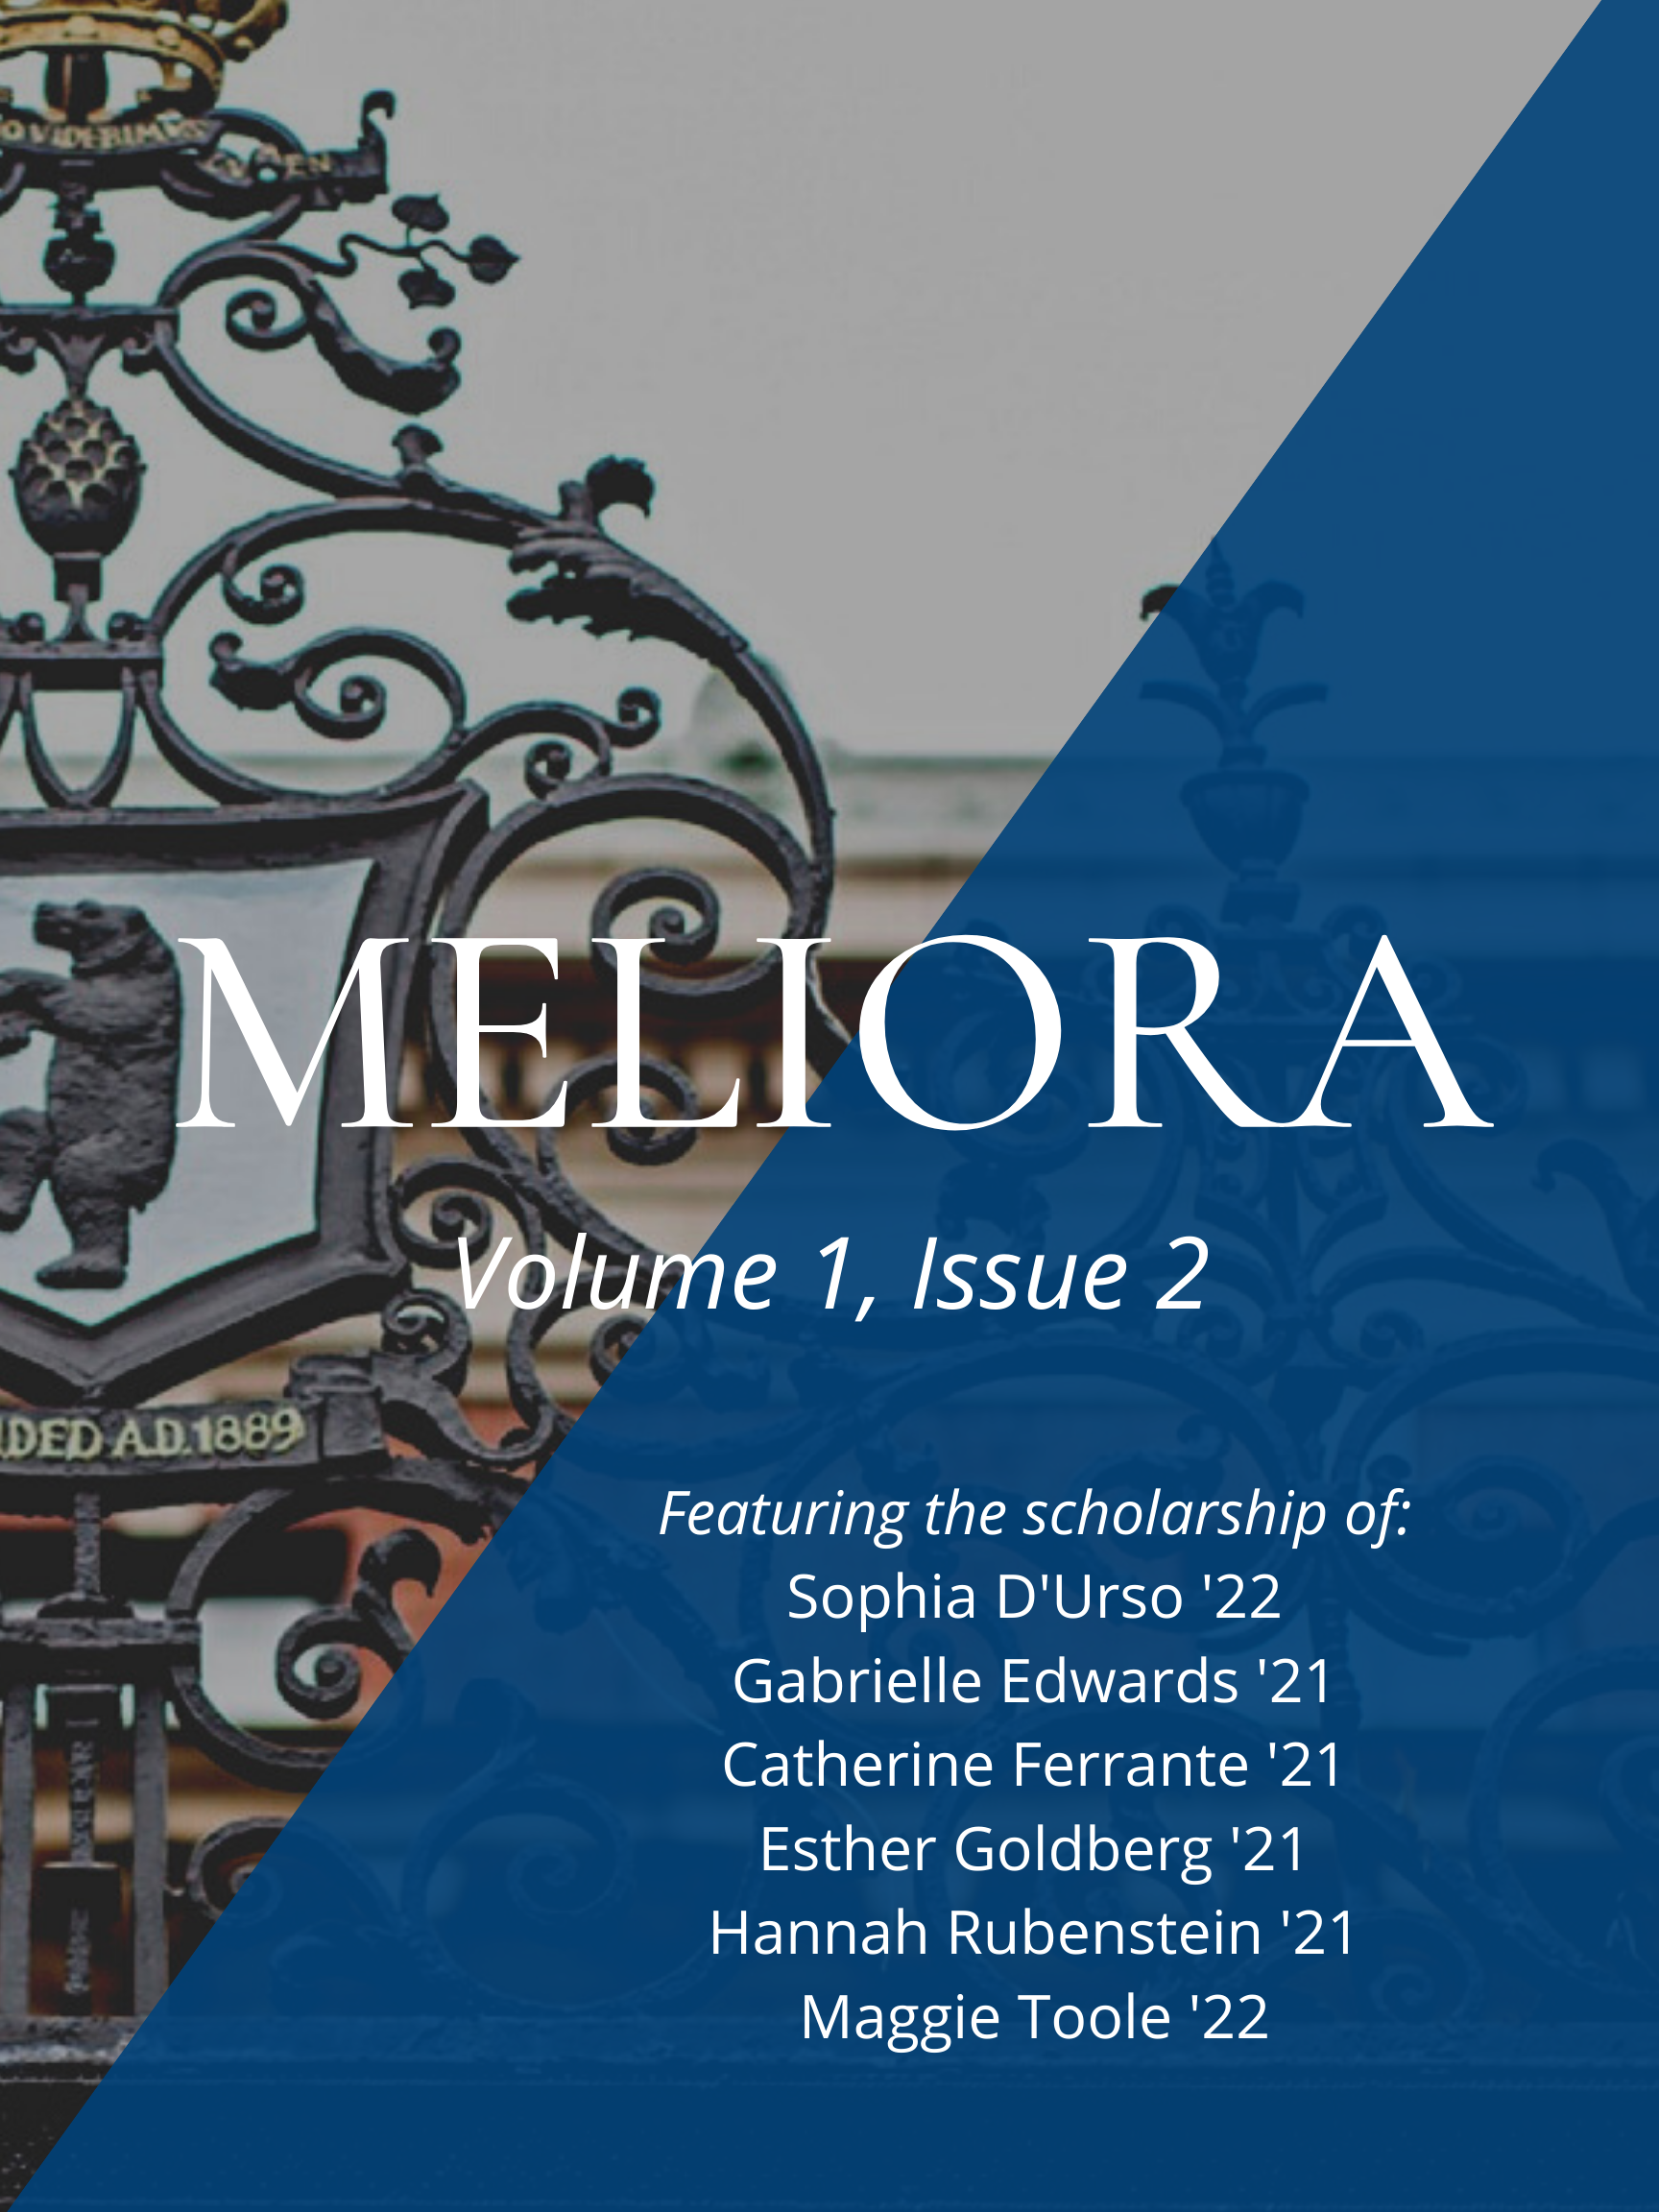 Meliora: Volume 1, Issue 2. Featuring the scholarship of Sophia D'Urso '22, Gabrielle Edwards '21, Catherine Ferrante '21, Esther Goldberg '21, Hannah Rubenstein '21, Maggie Toole '22.